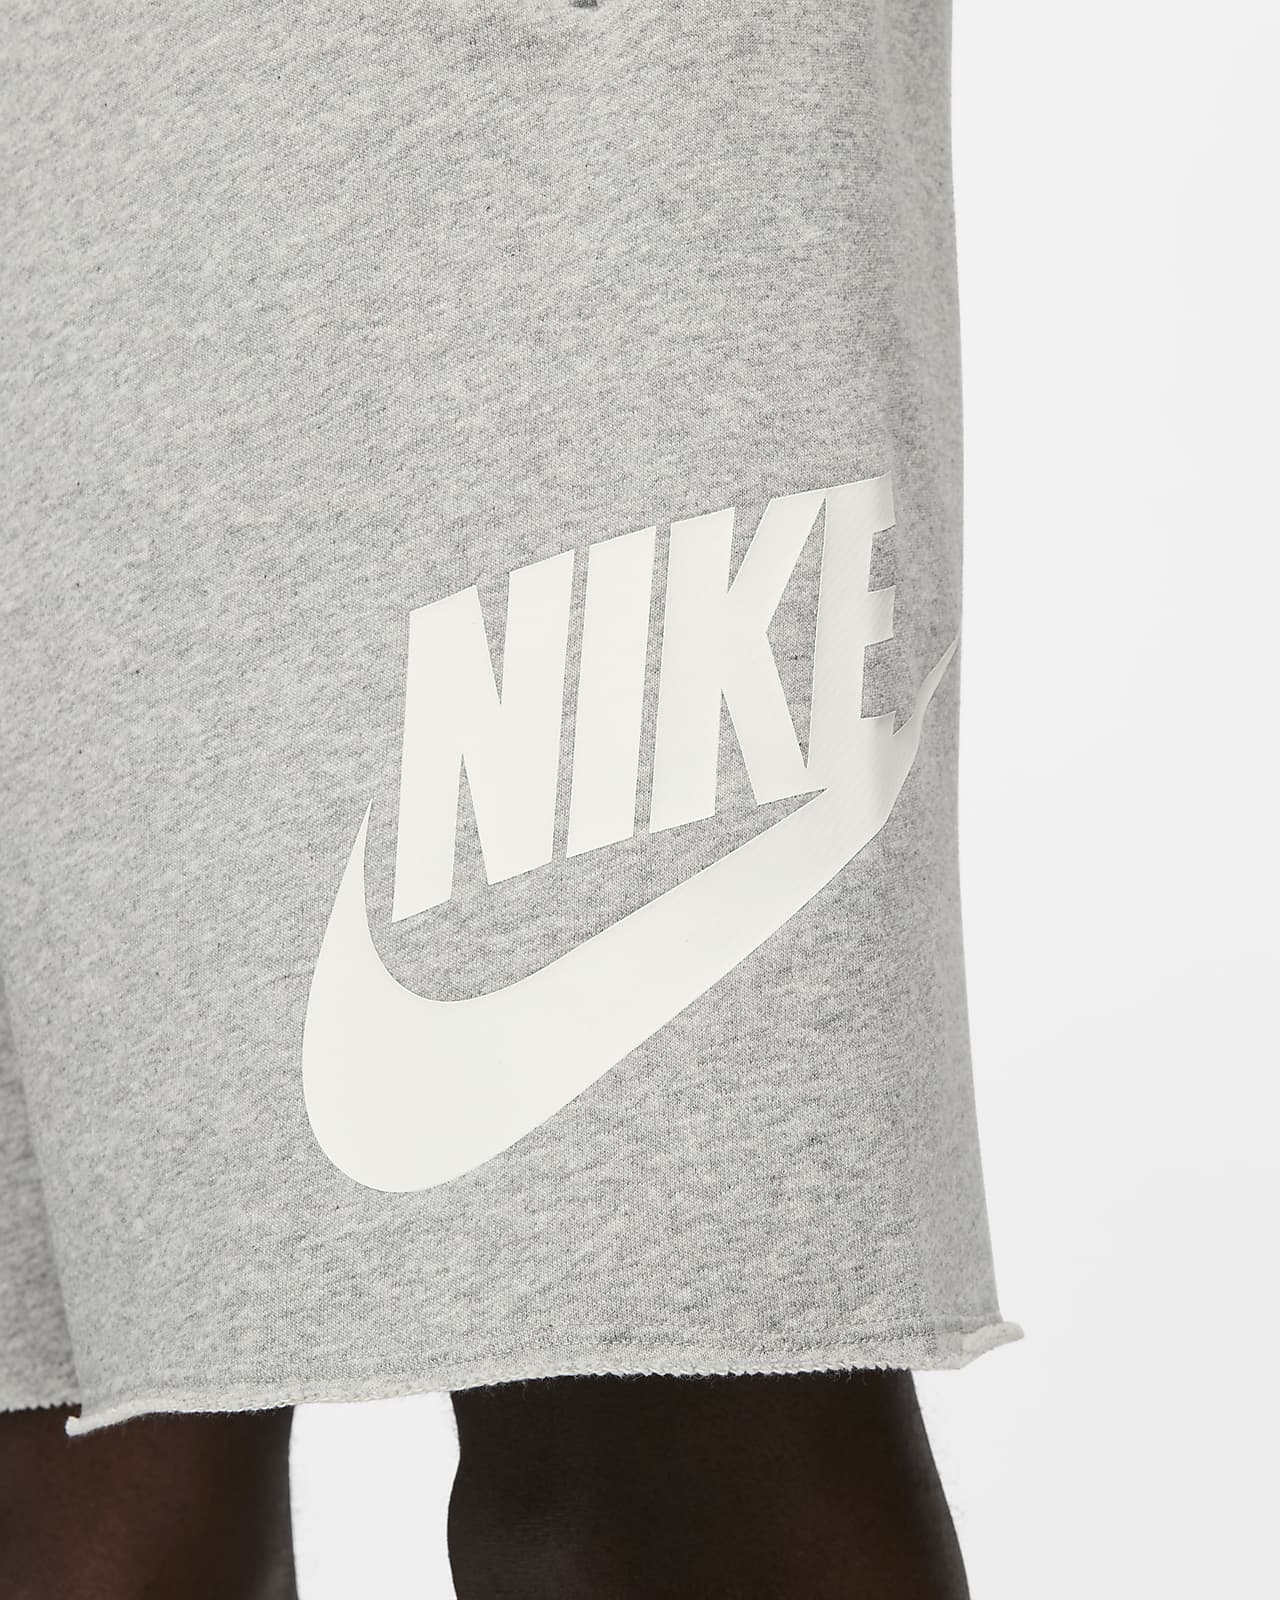 Nike Mens Aw77 French Terry Alumni Shorts - Grey/White (Size: Medium) 